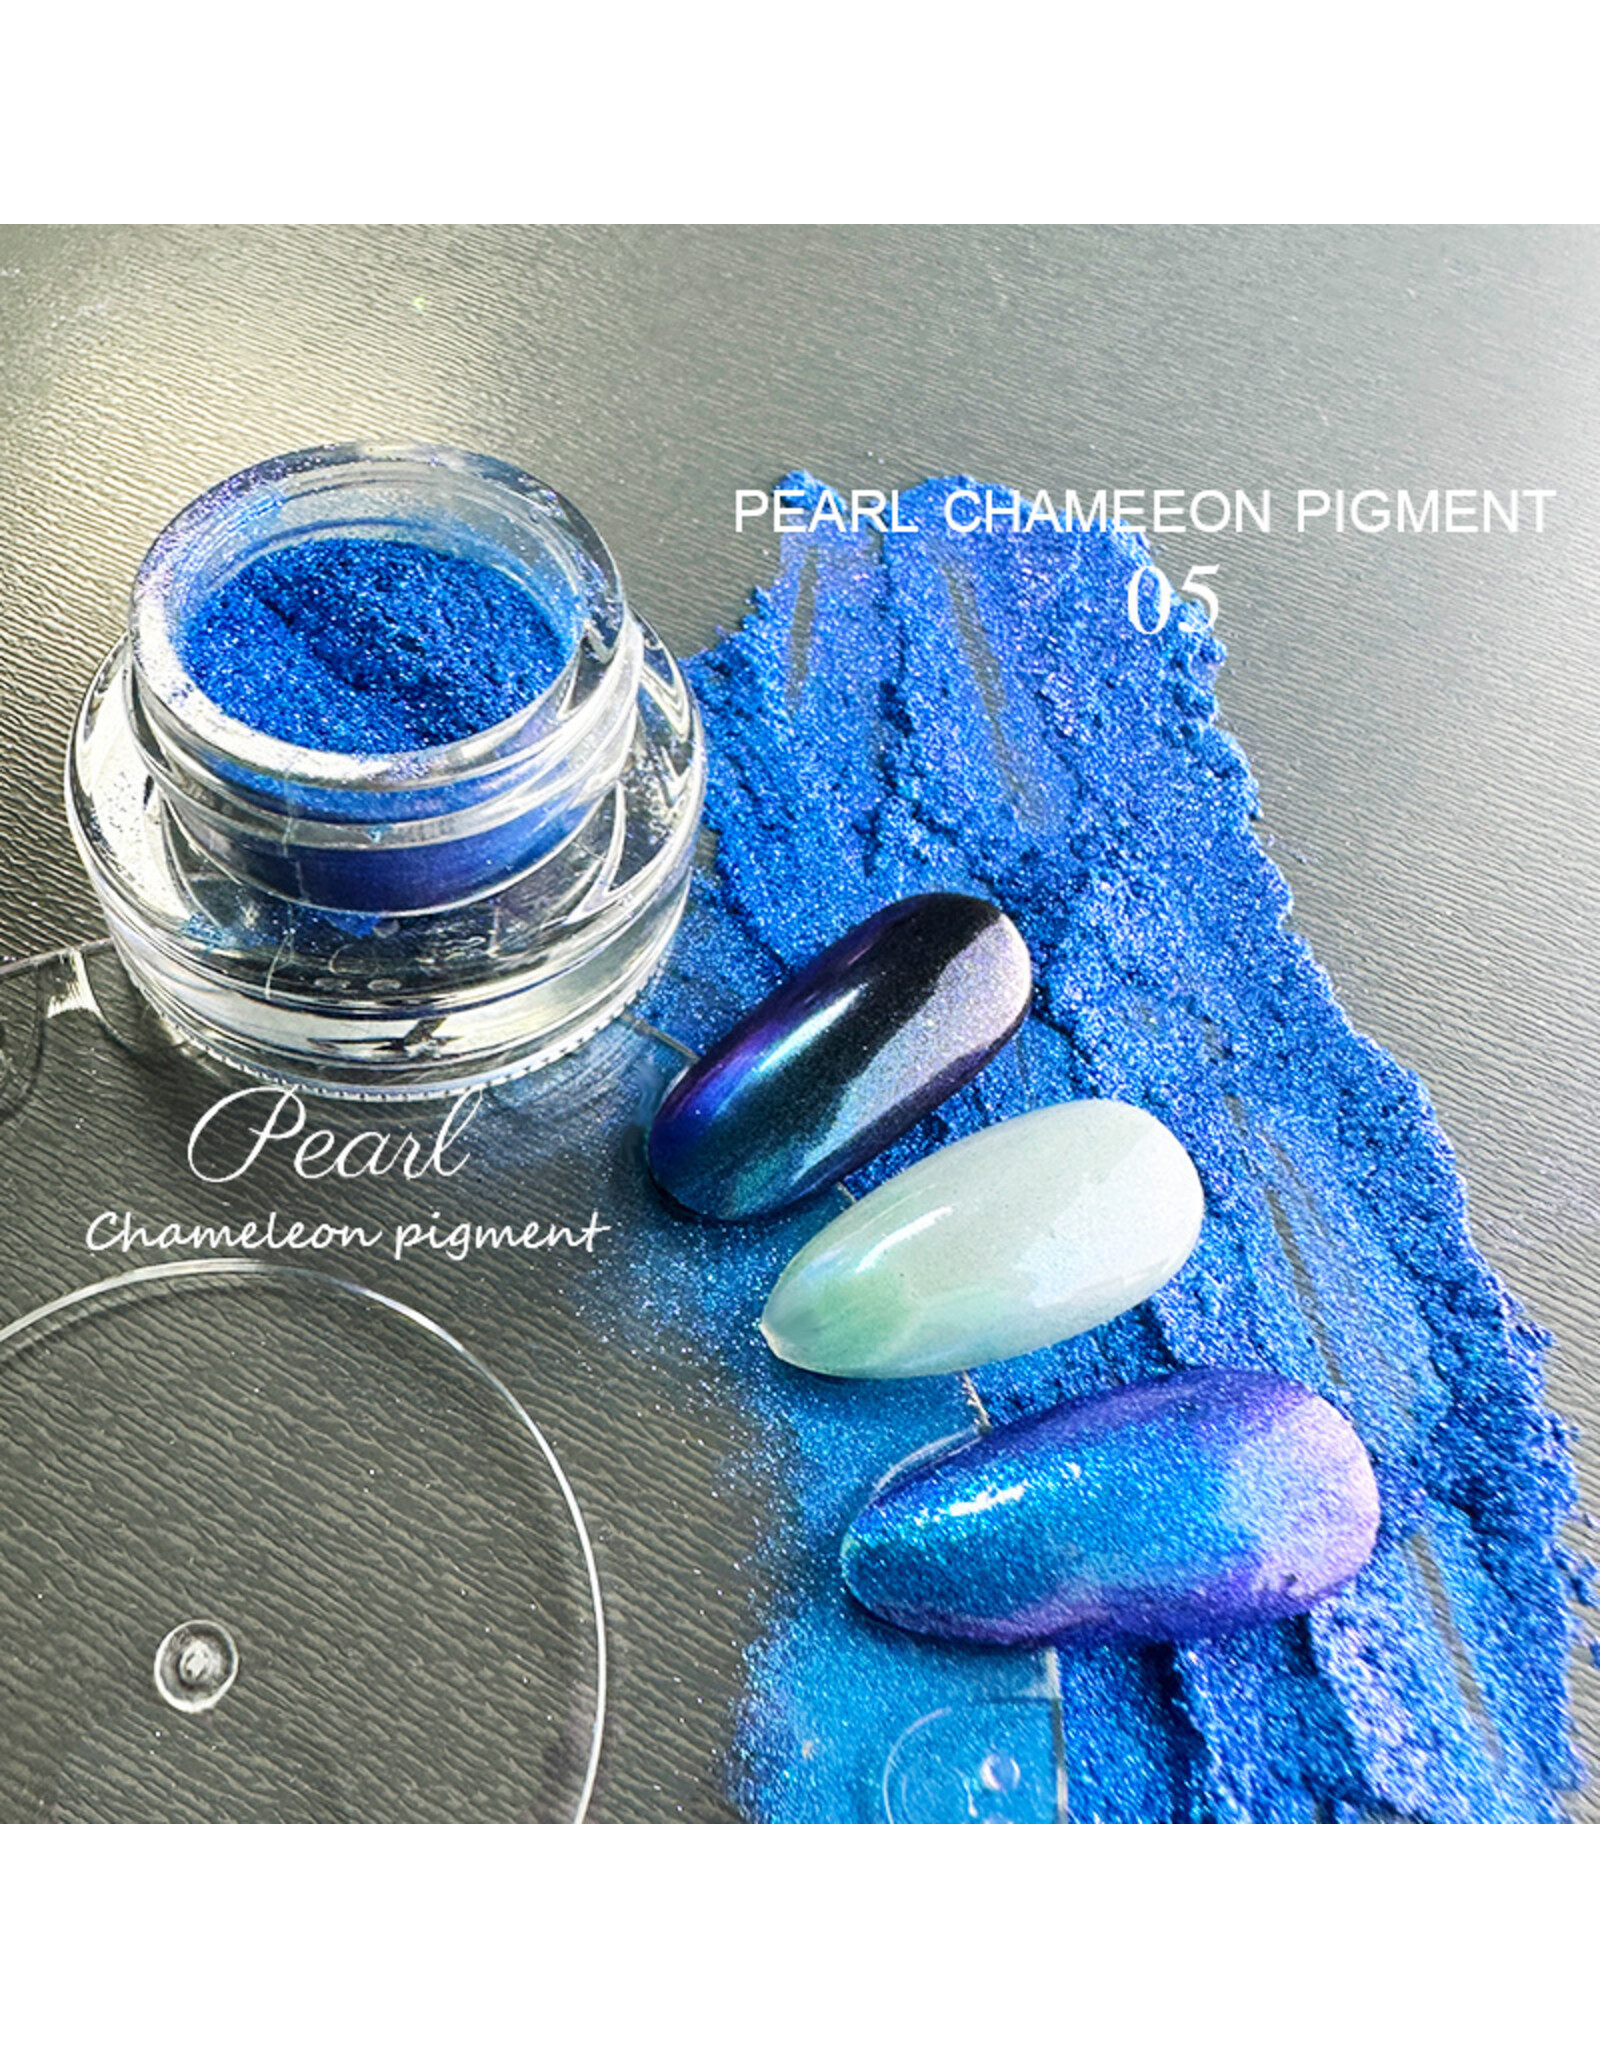 Mega Beauty Shop® Pearl chameleon pigment (05)